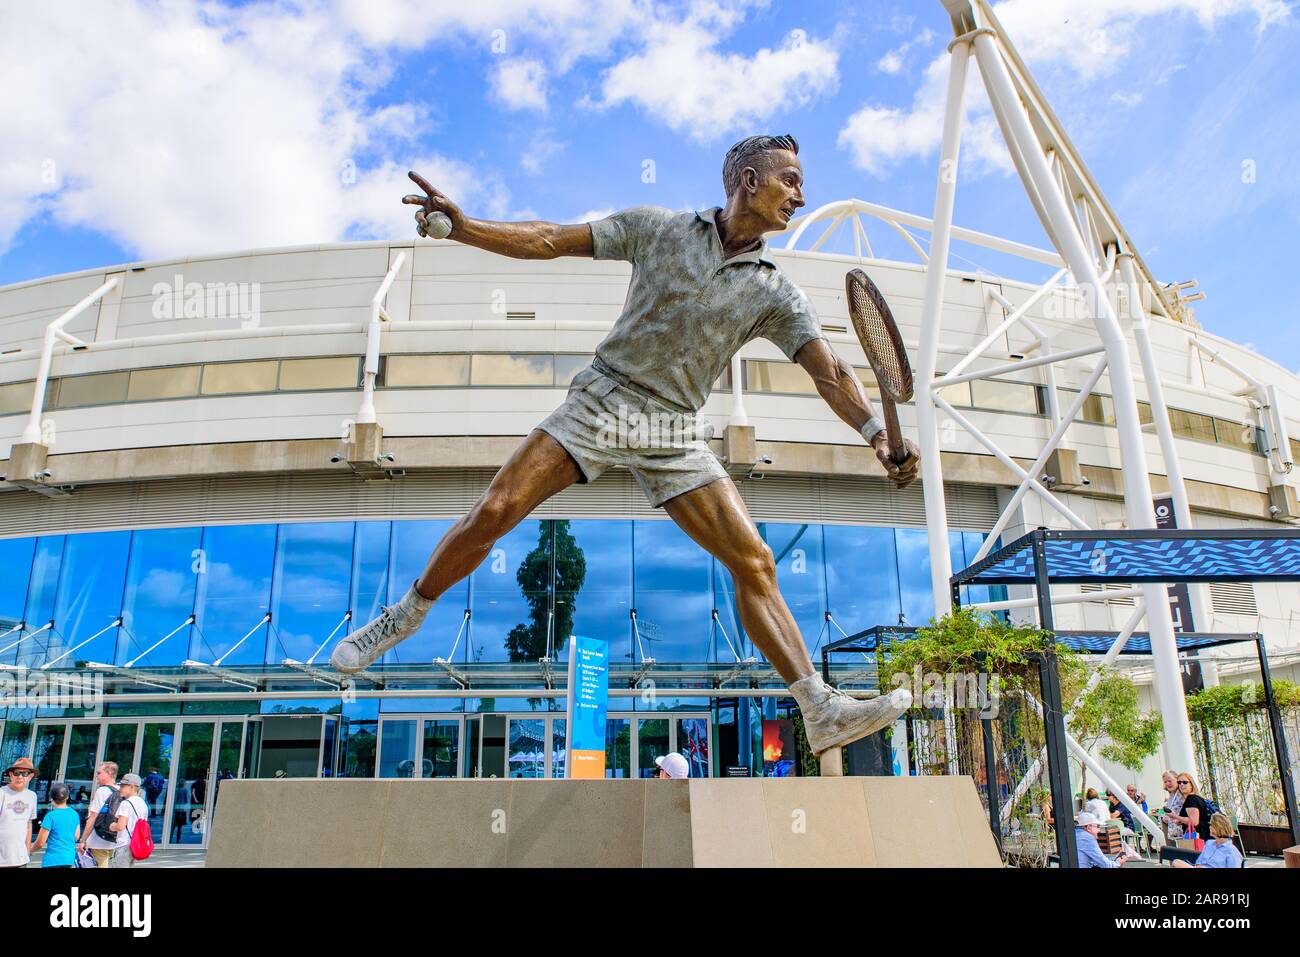 Statue of Rod Laver, an Australian tennis player, at Melbourne Park, Melbourne, Australia Stock Photo